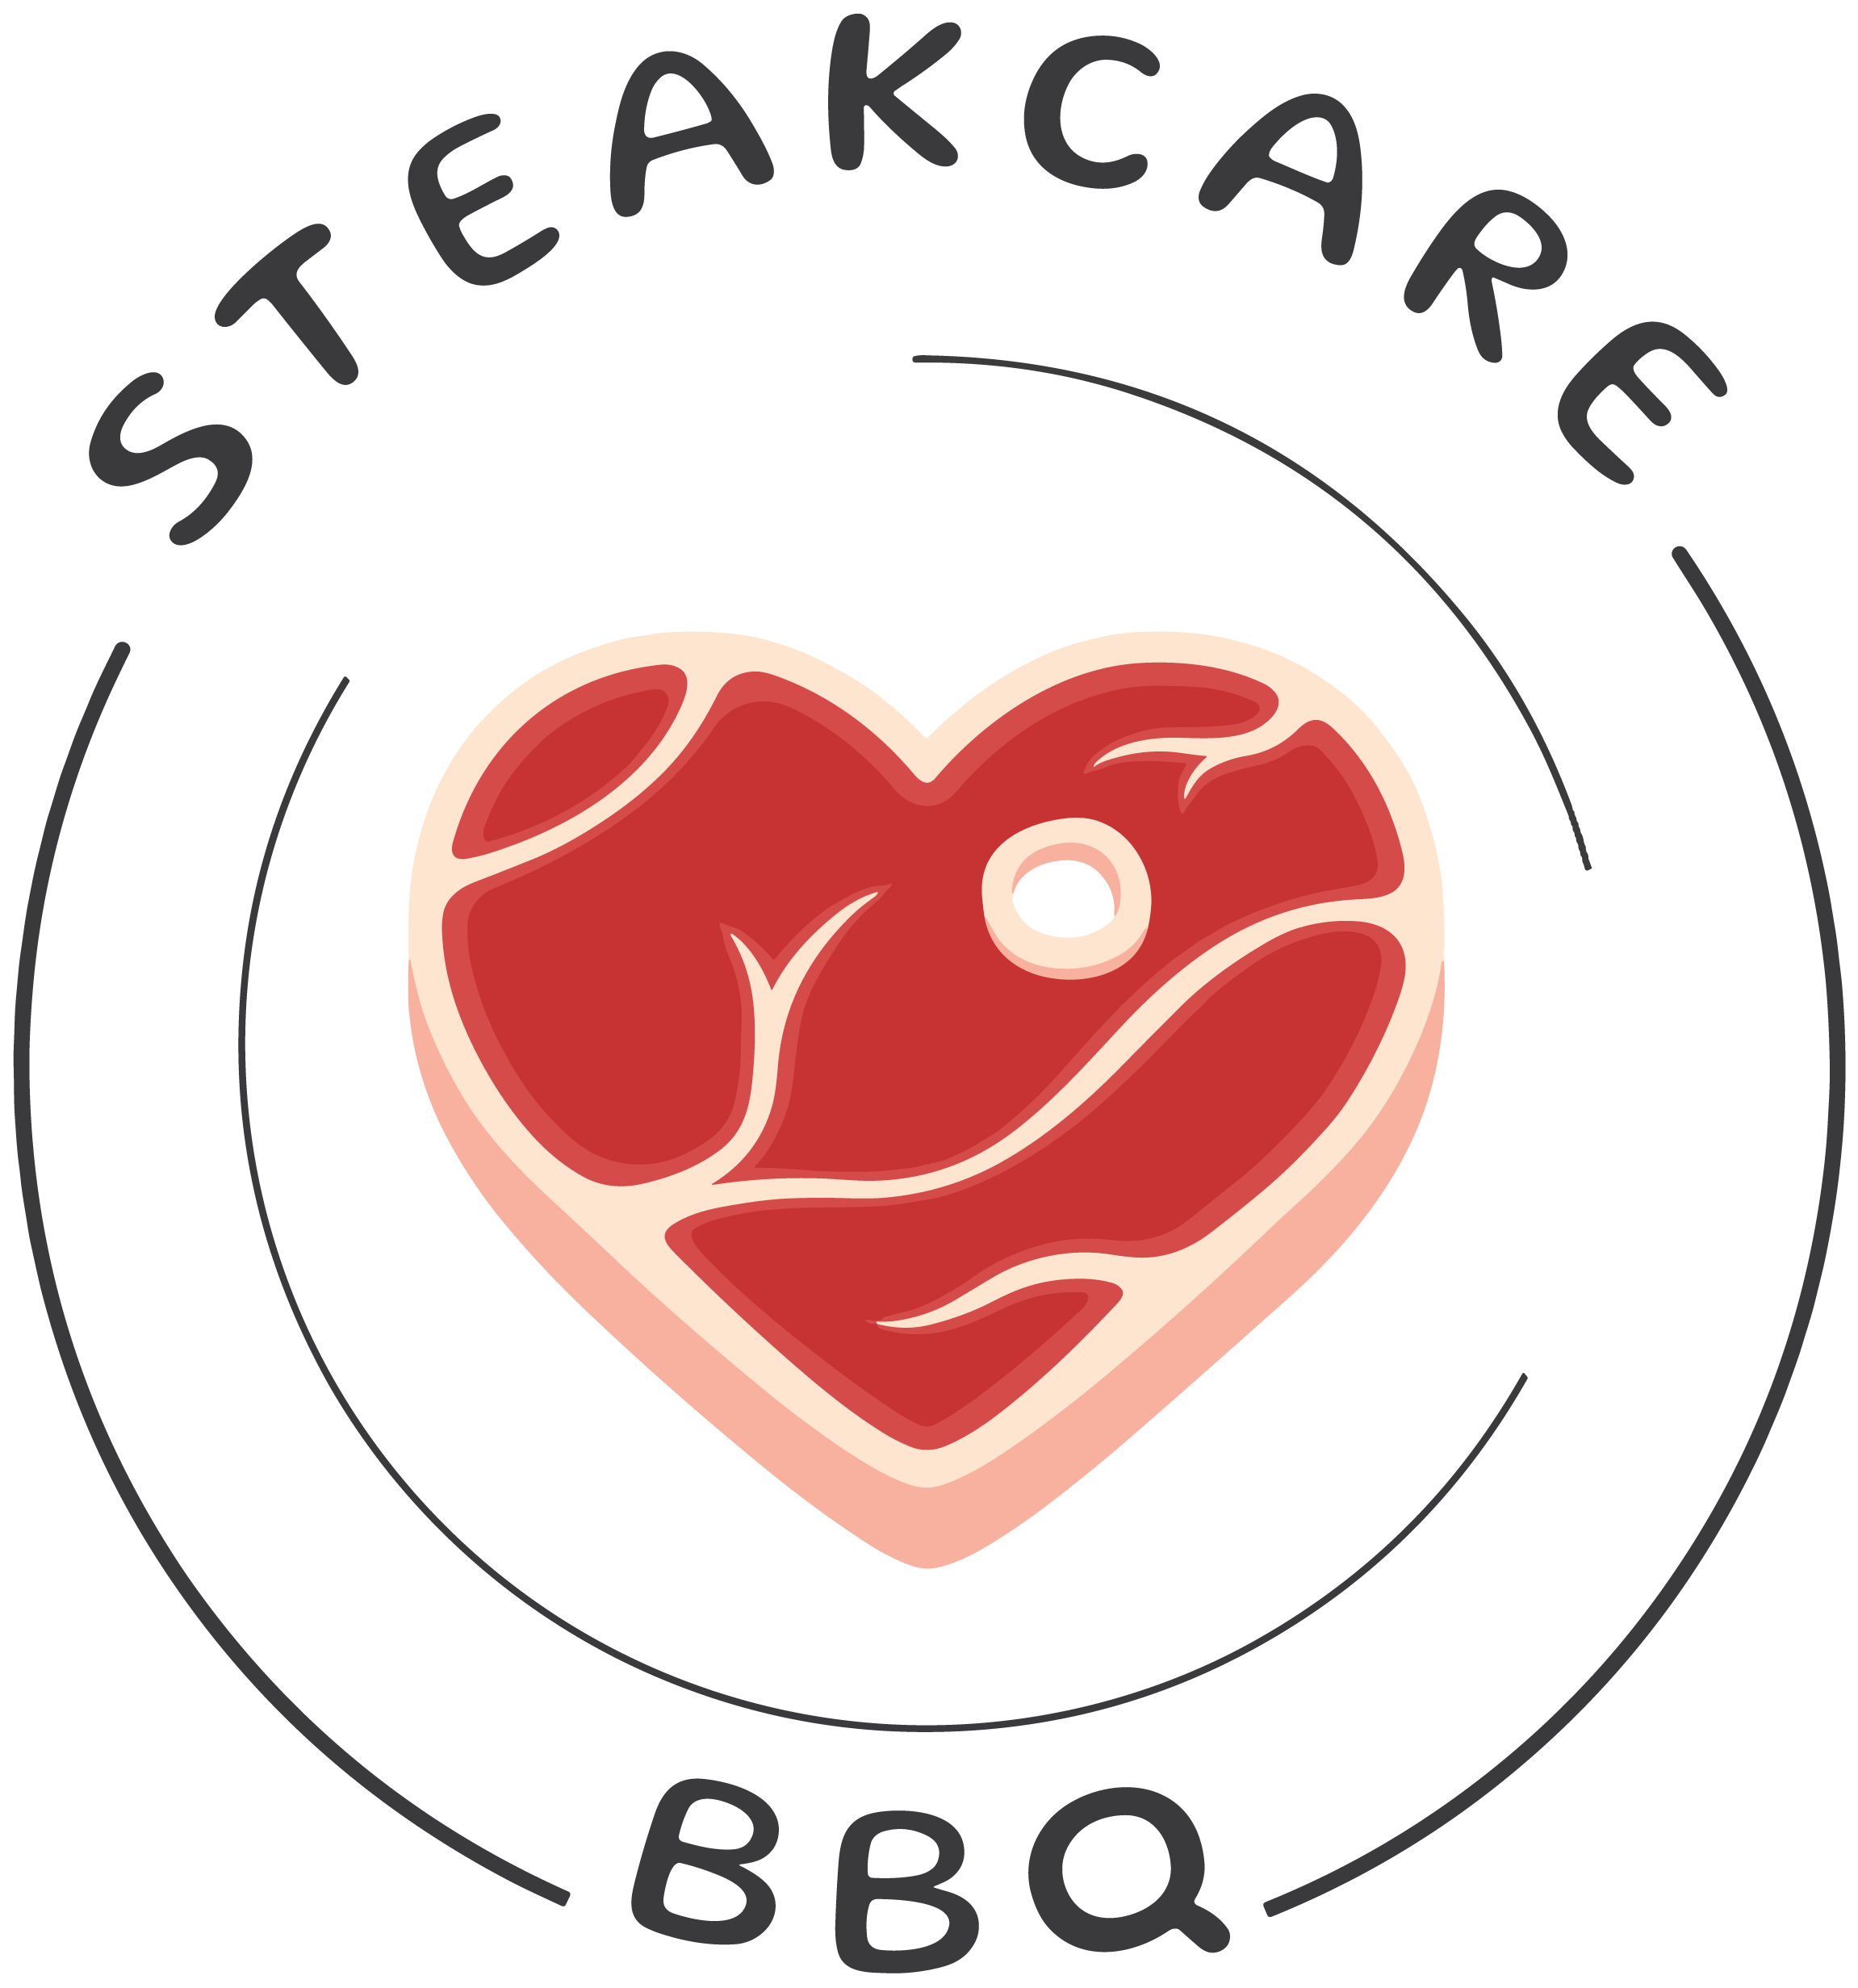 SteakCare